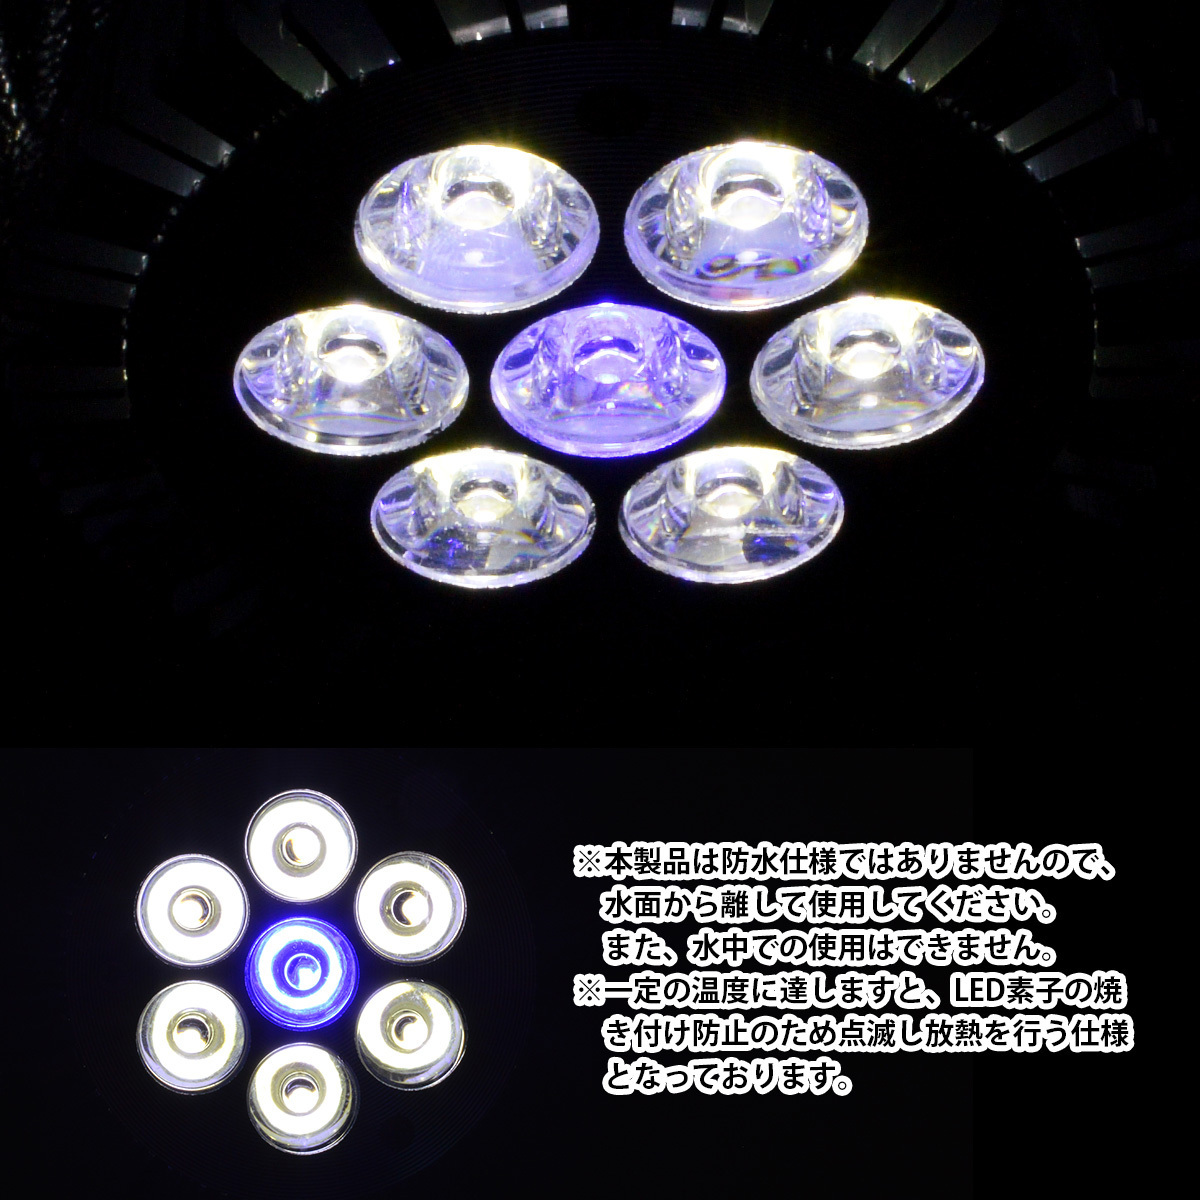 LED 電球 スポットライト 14W 白6/青1灯水槽照明 E26 観賞育成用 LEDスポットライト 電気 水草 サンゴ 熱帯魚 観賞魚 植物育成_画像4